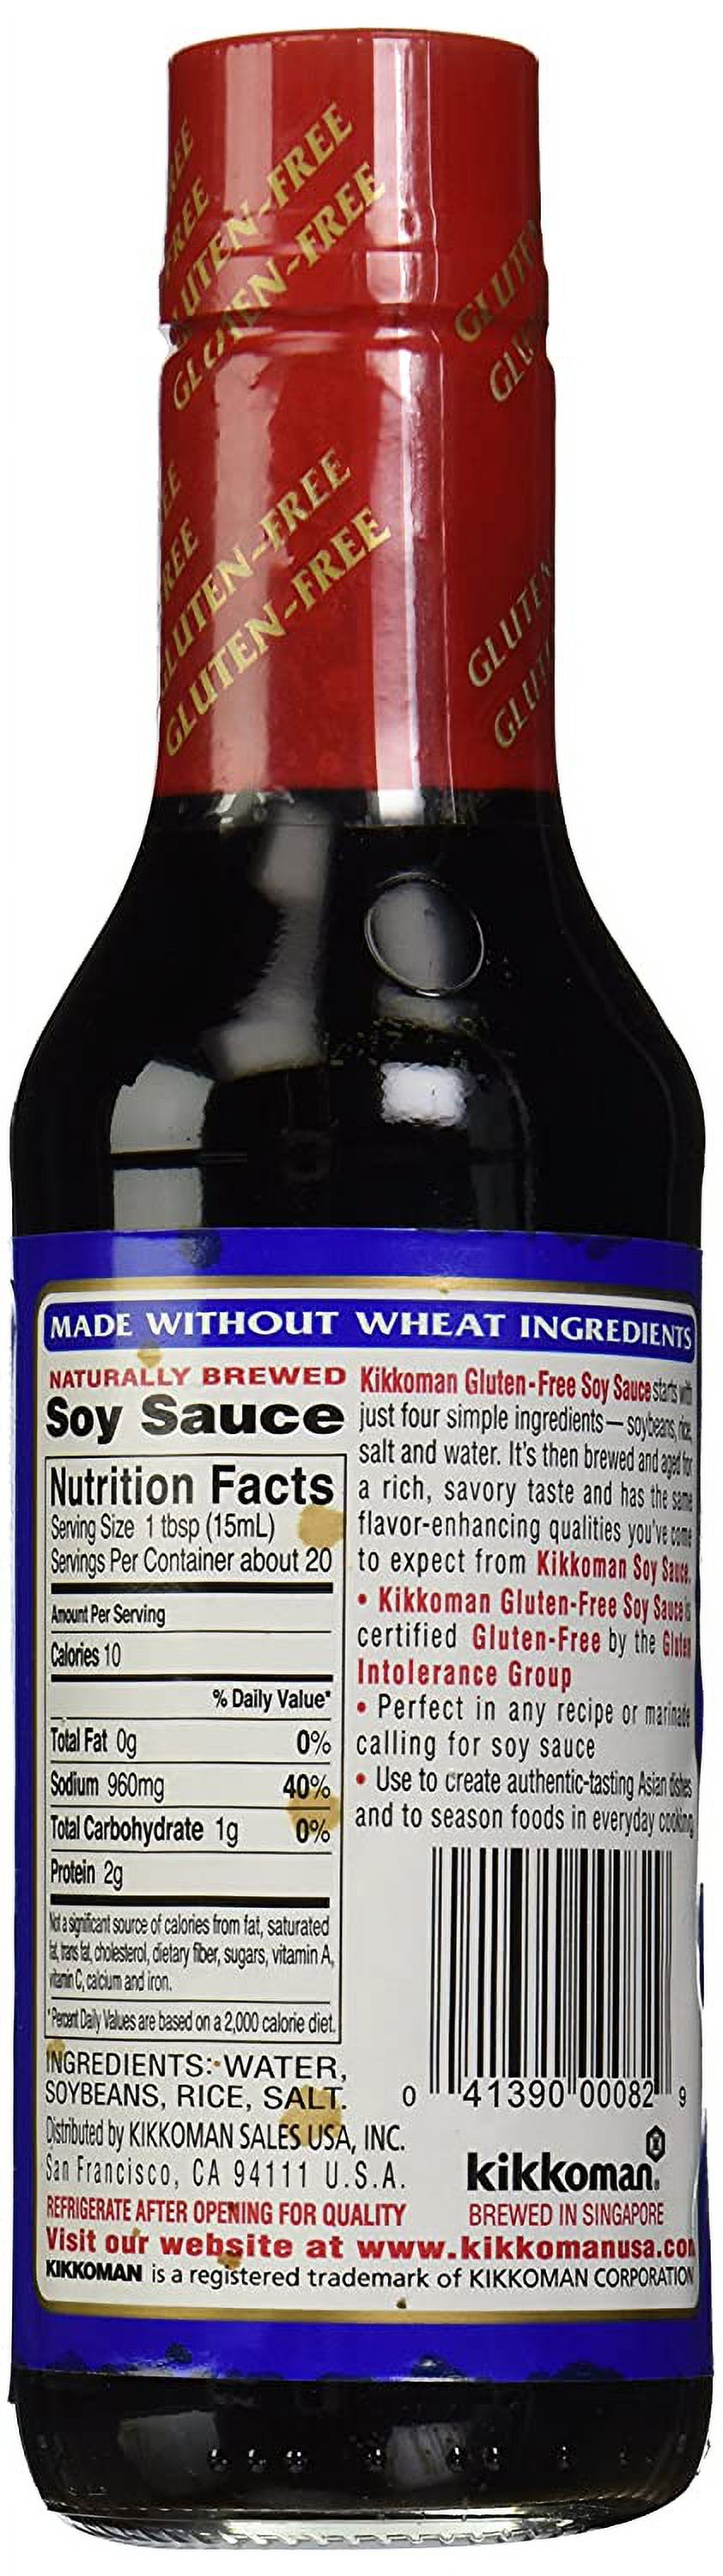 Kikkoman Gluten-Free Soy Sauce, 10 oz - image 3 of 6